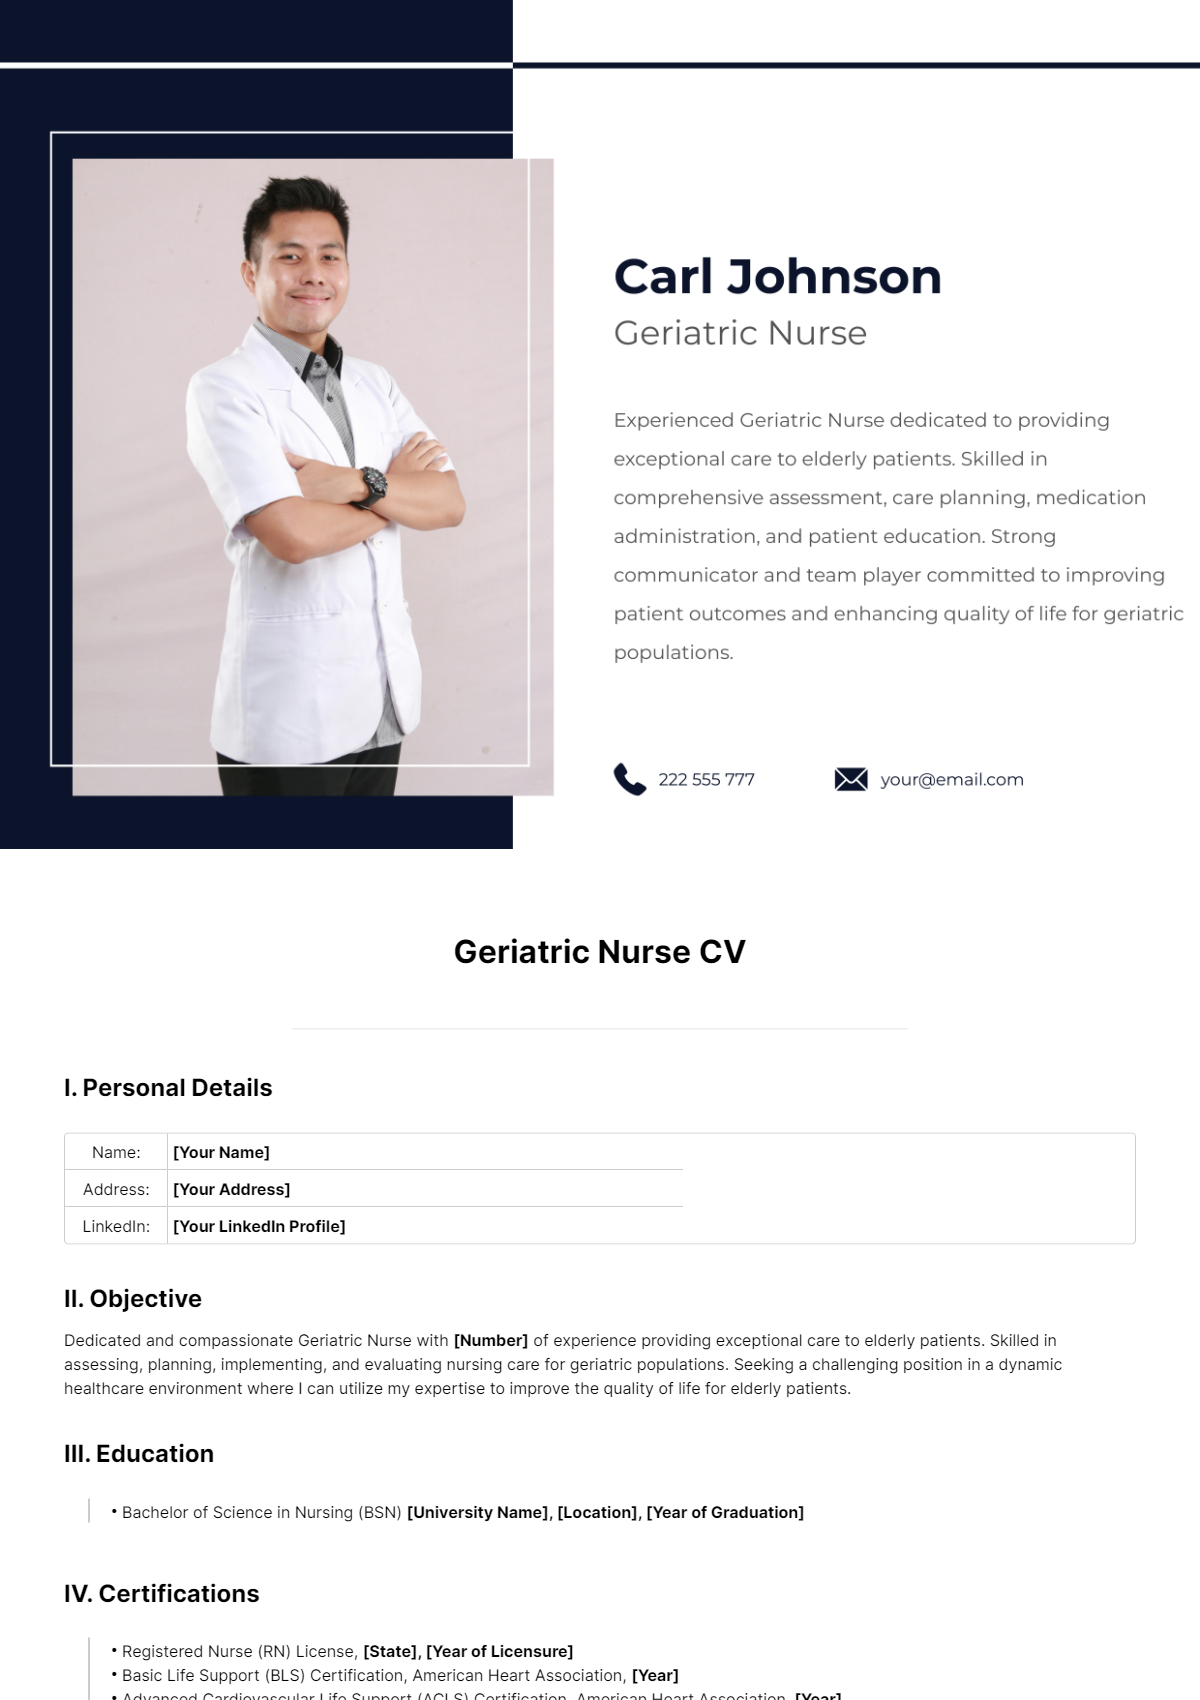 Geriatric Nurse CV Template